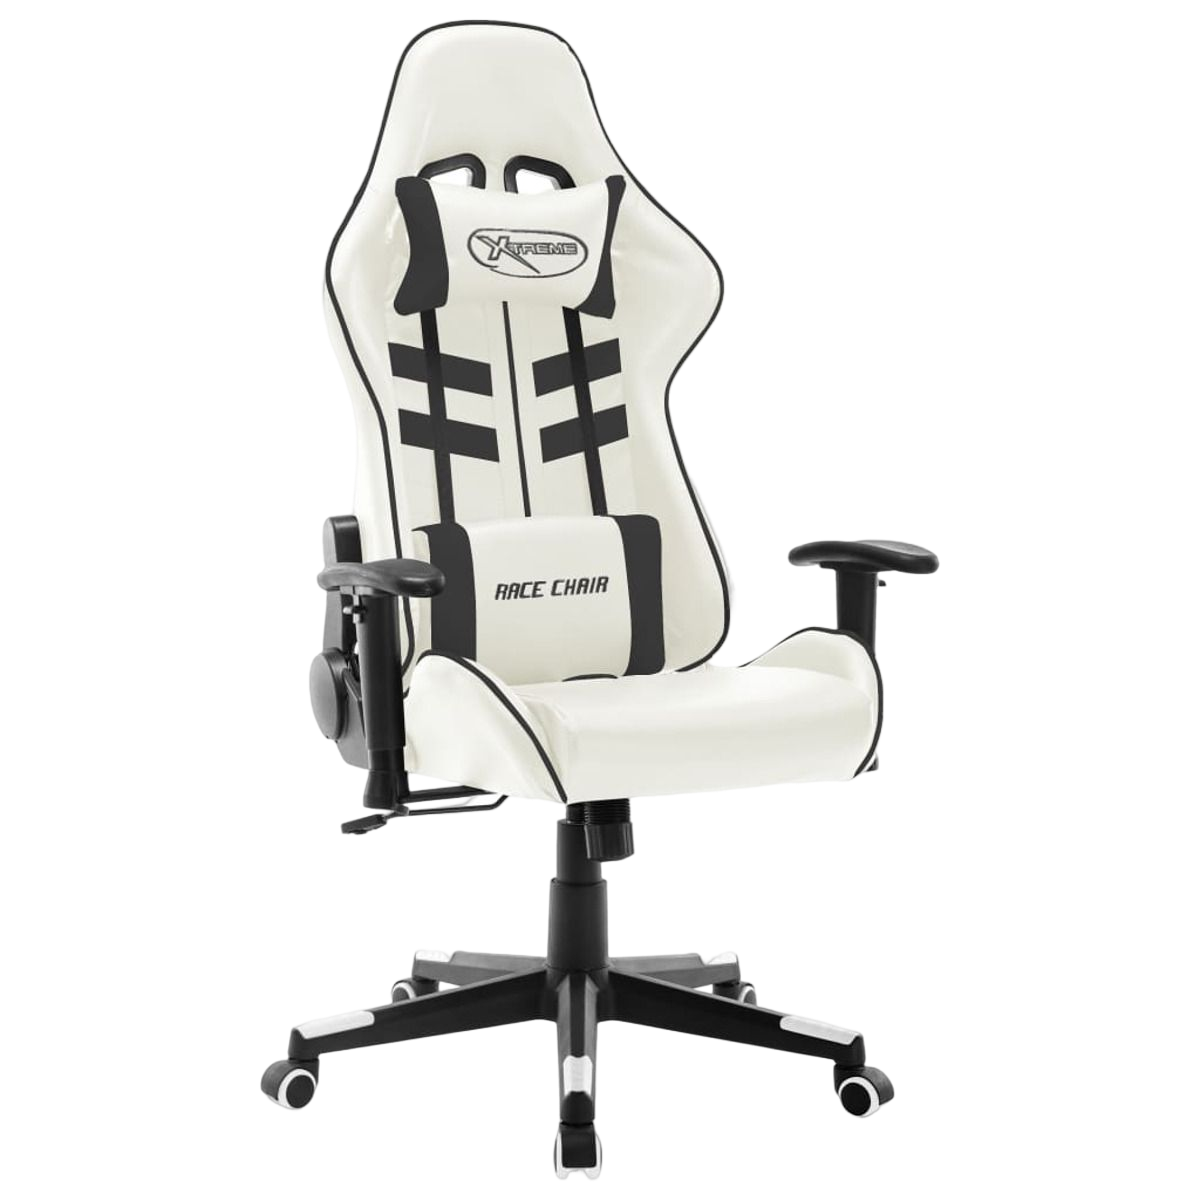 VIDAXL 20535 Gaming Stuhl, Weiß